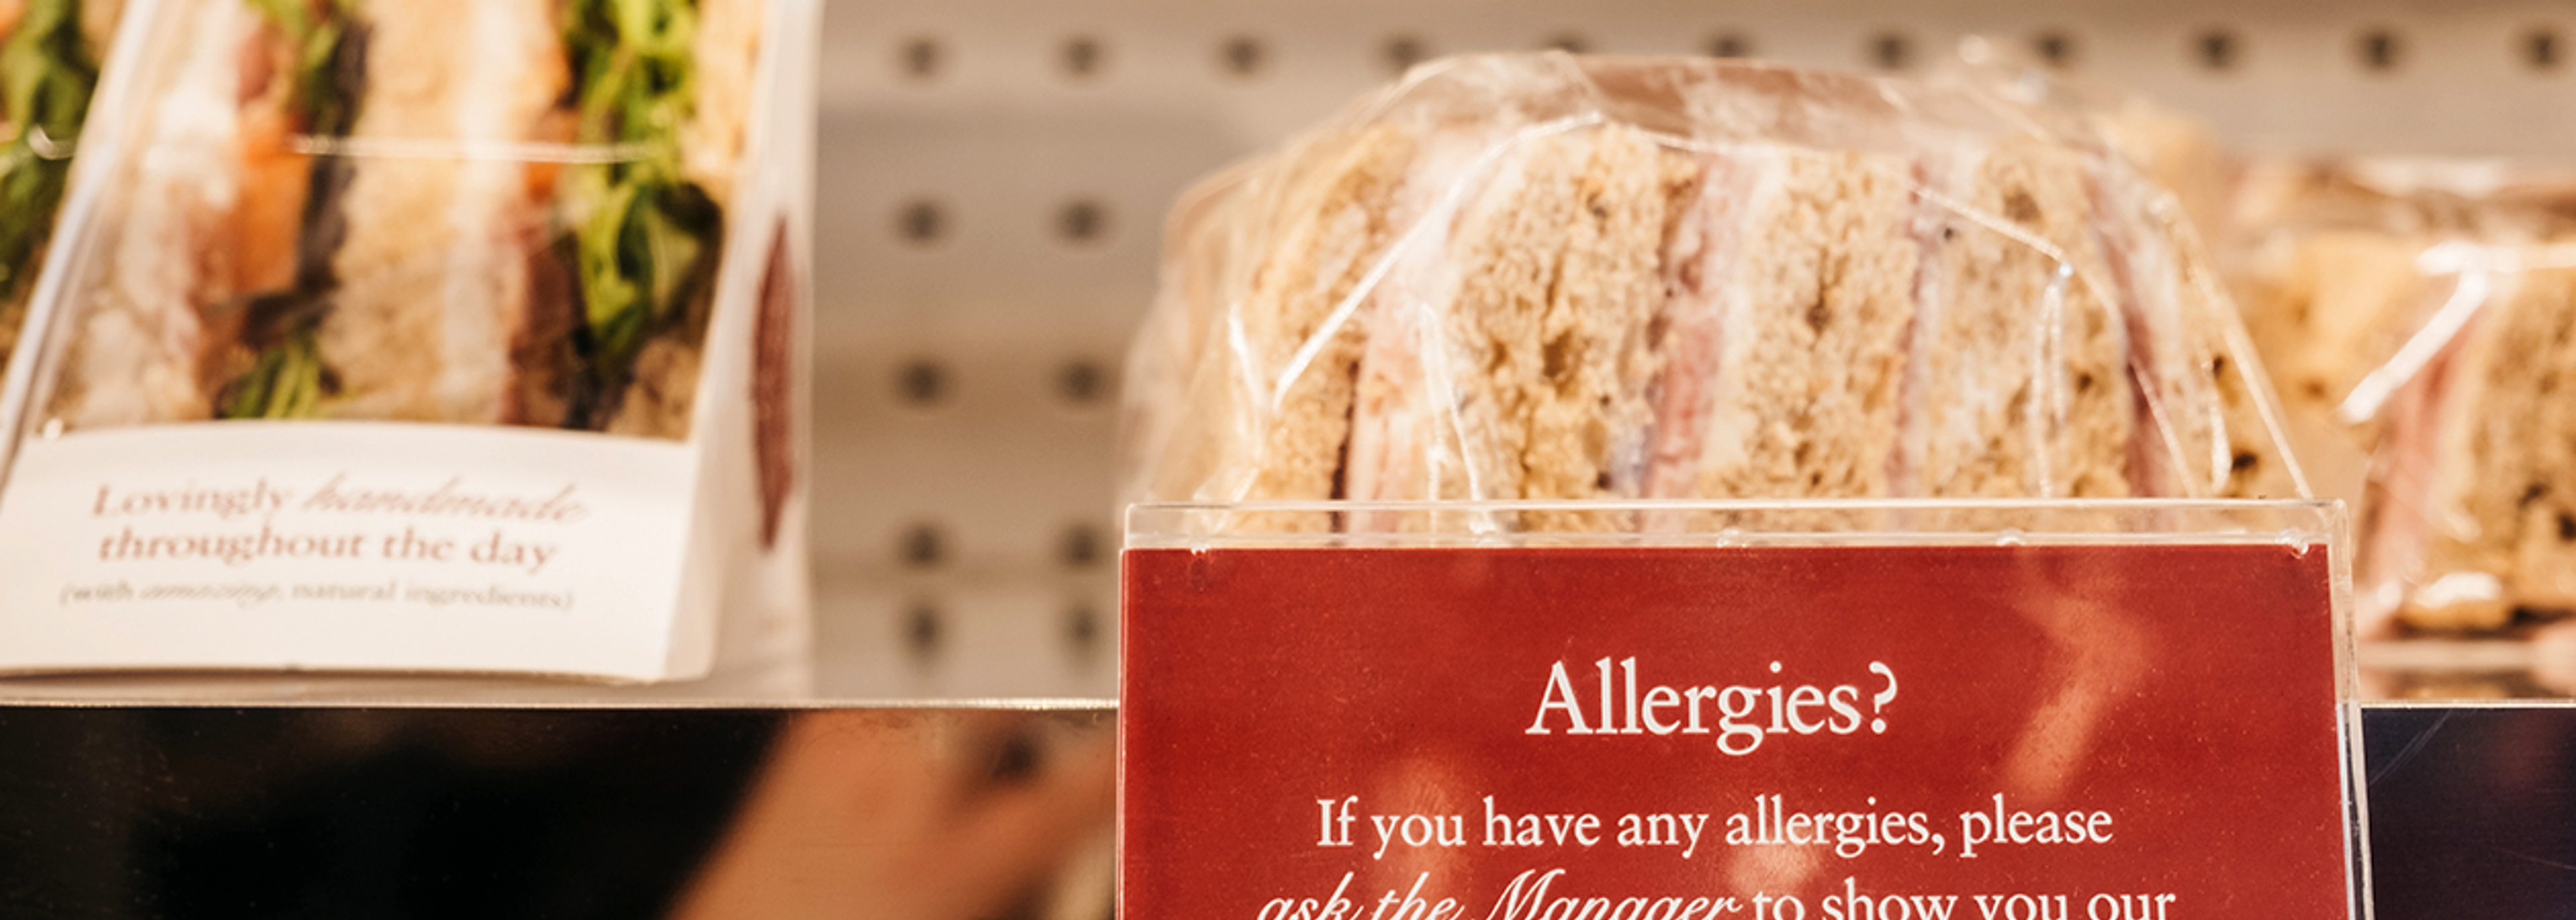 FSA changes tack on allergen labelling deadline